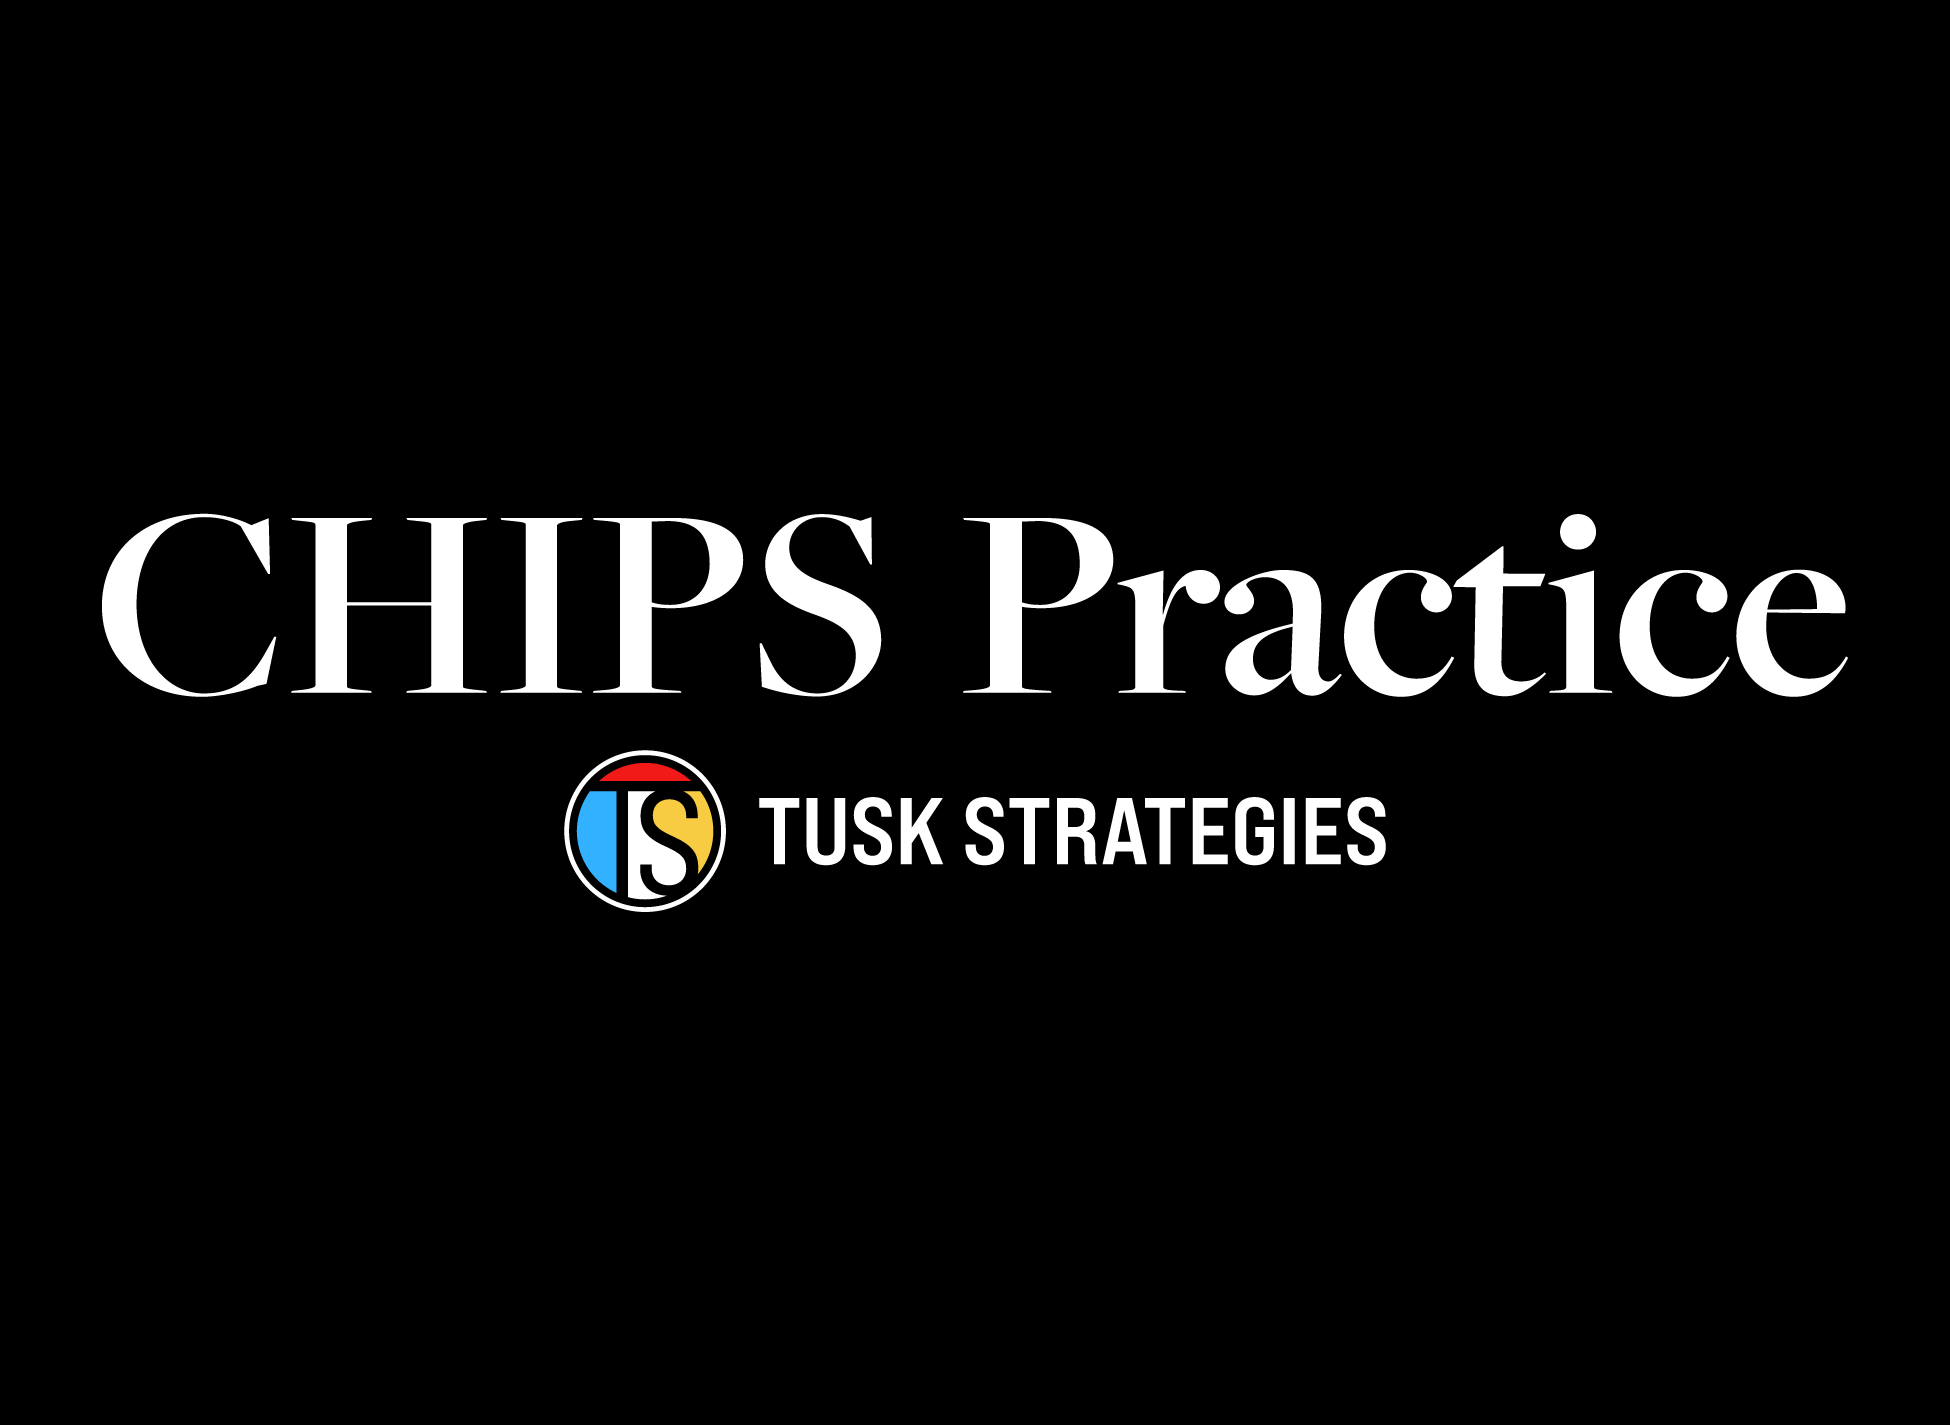 CHIPS Practice Tusk Strategies